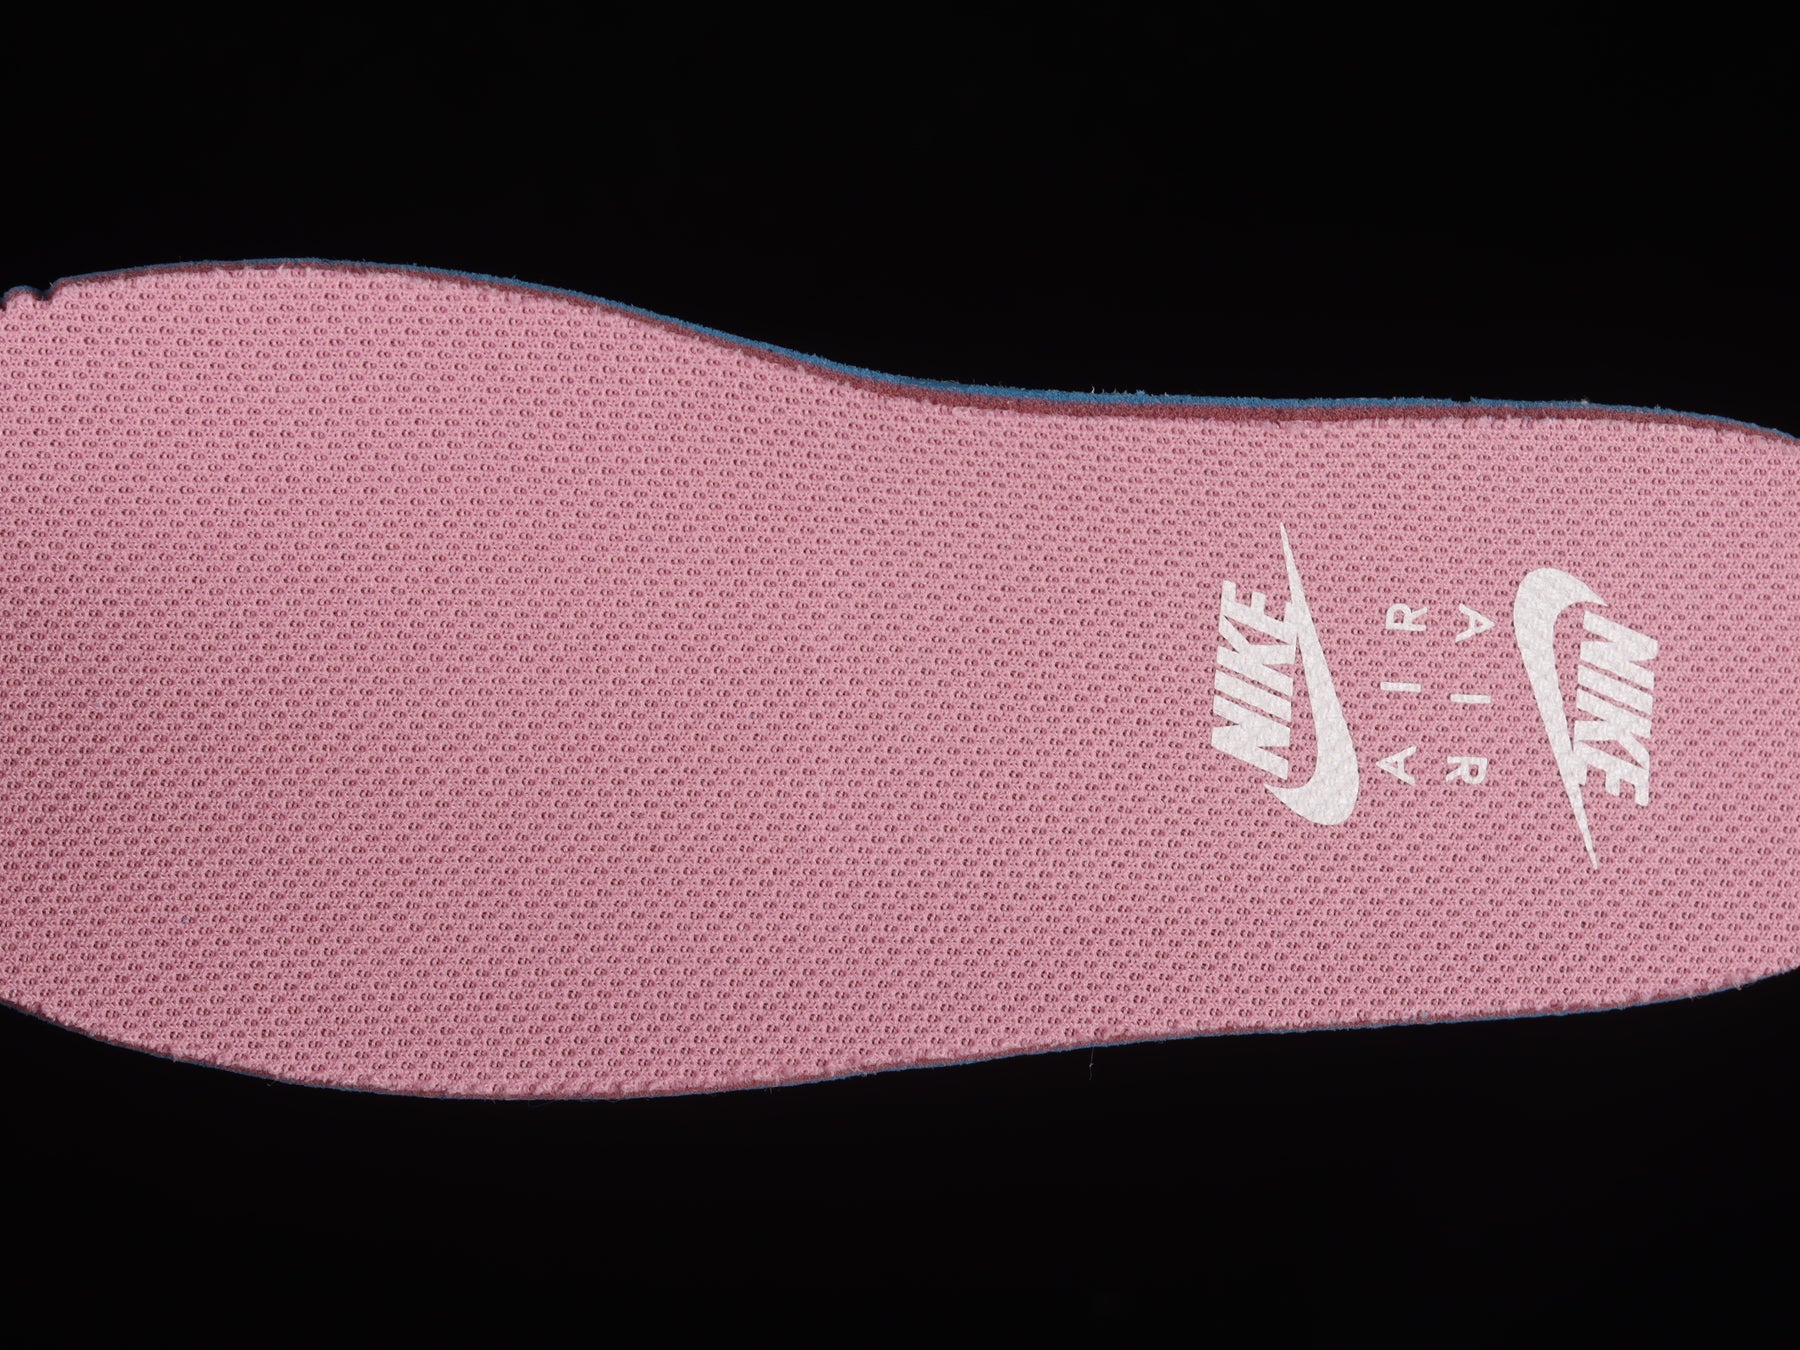 NikeWMNS Air Force 1 AF1 Flamingo Shadow - Magic Pink